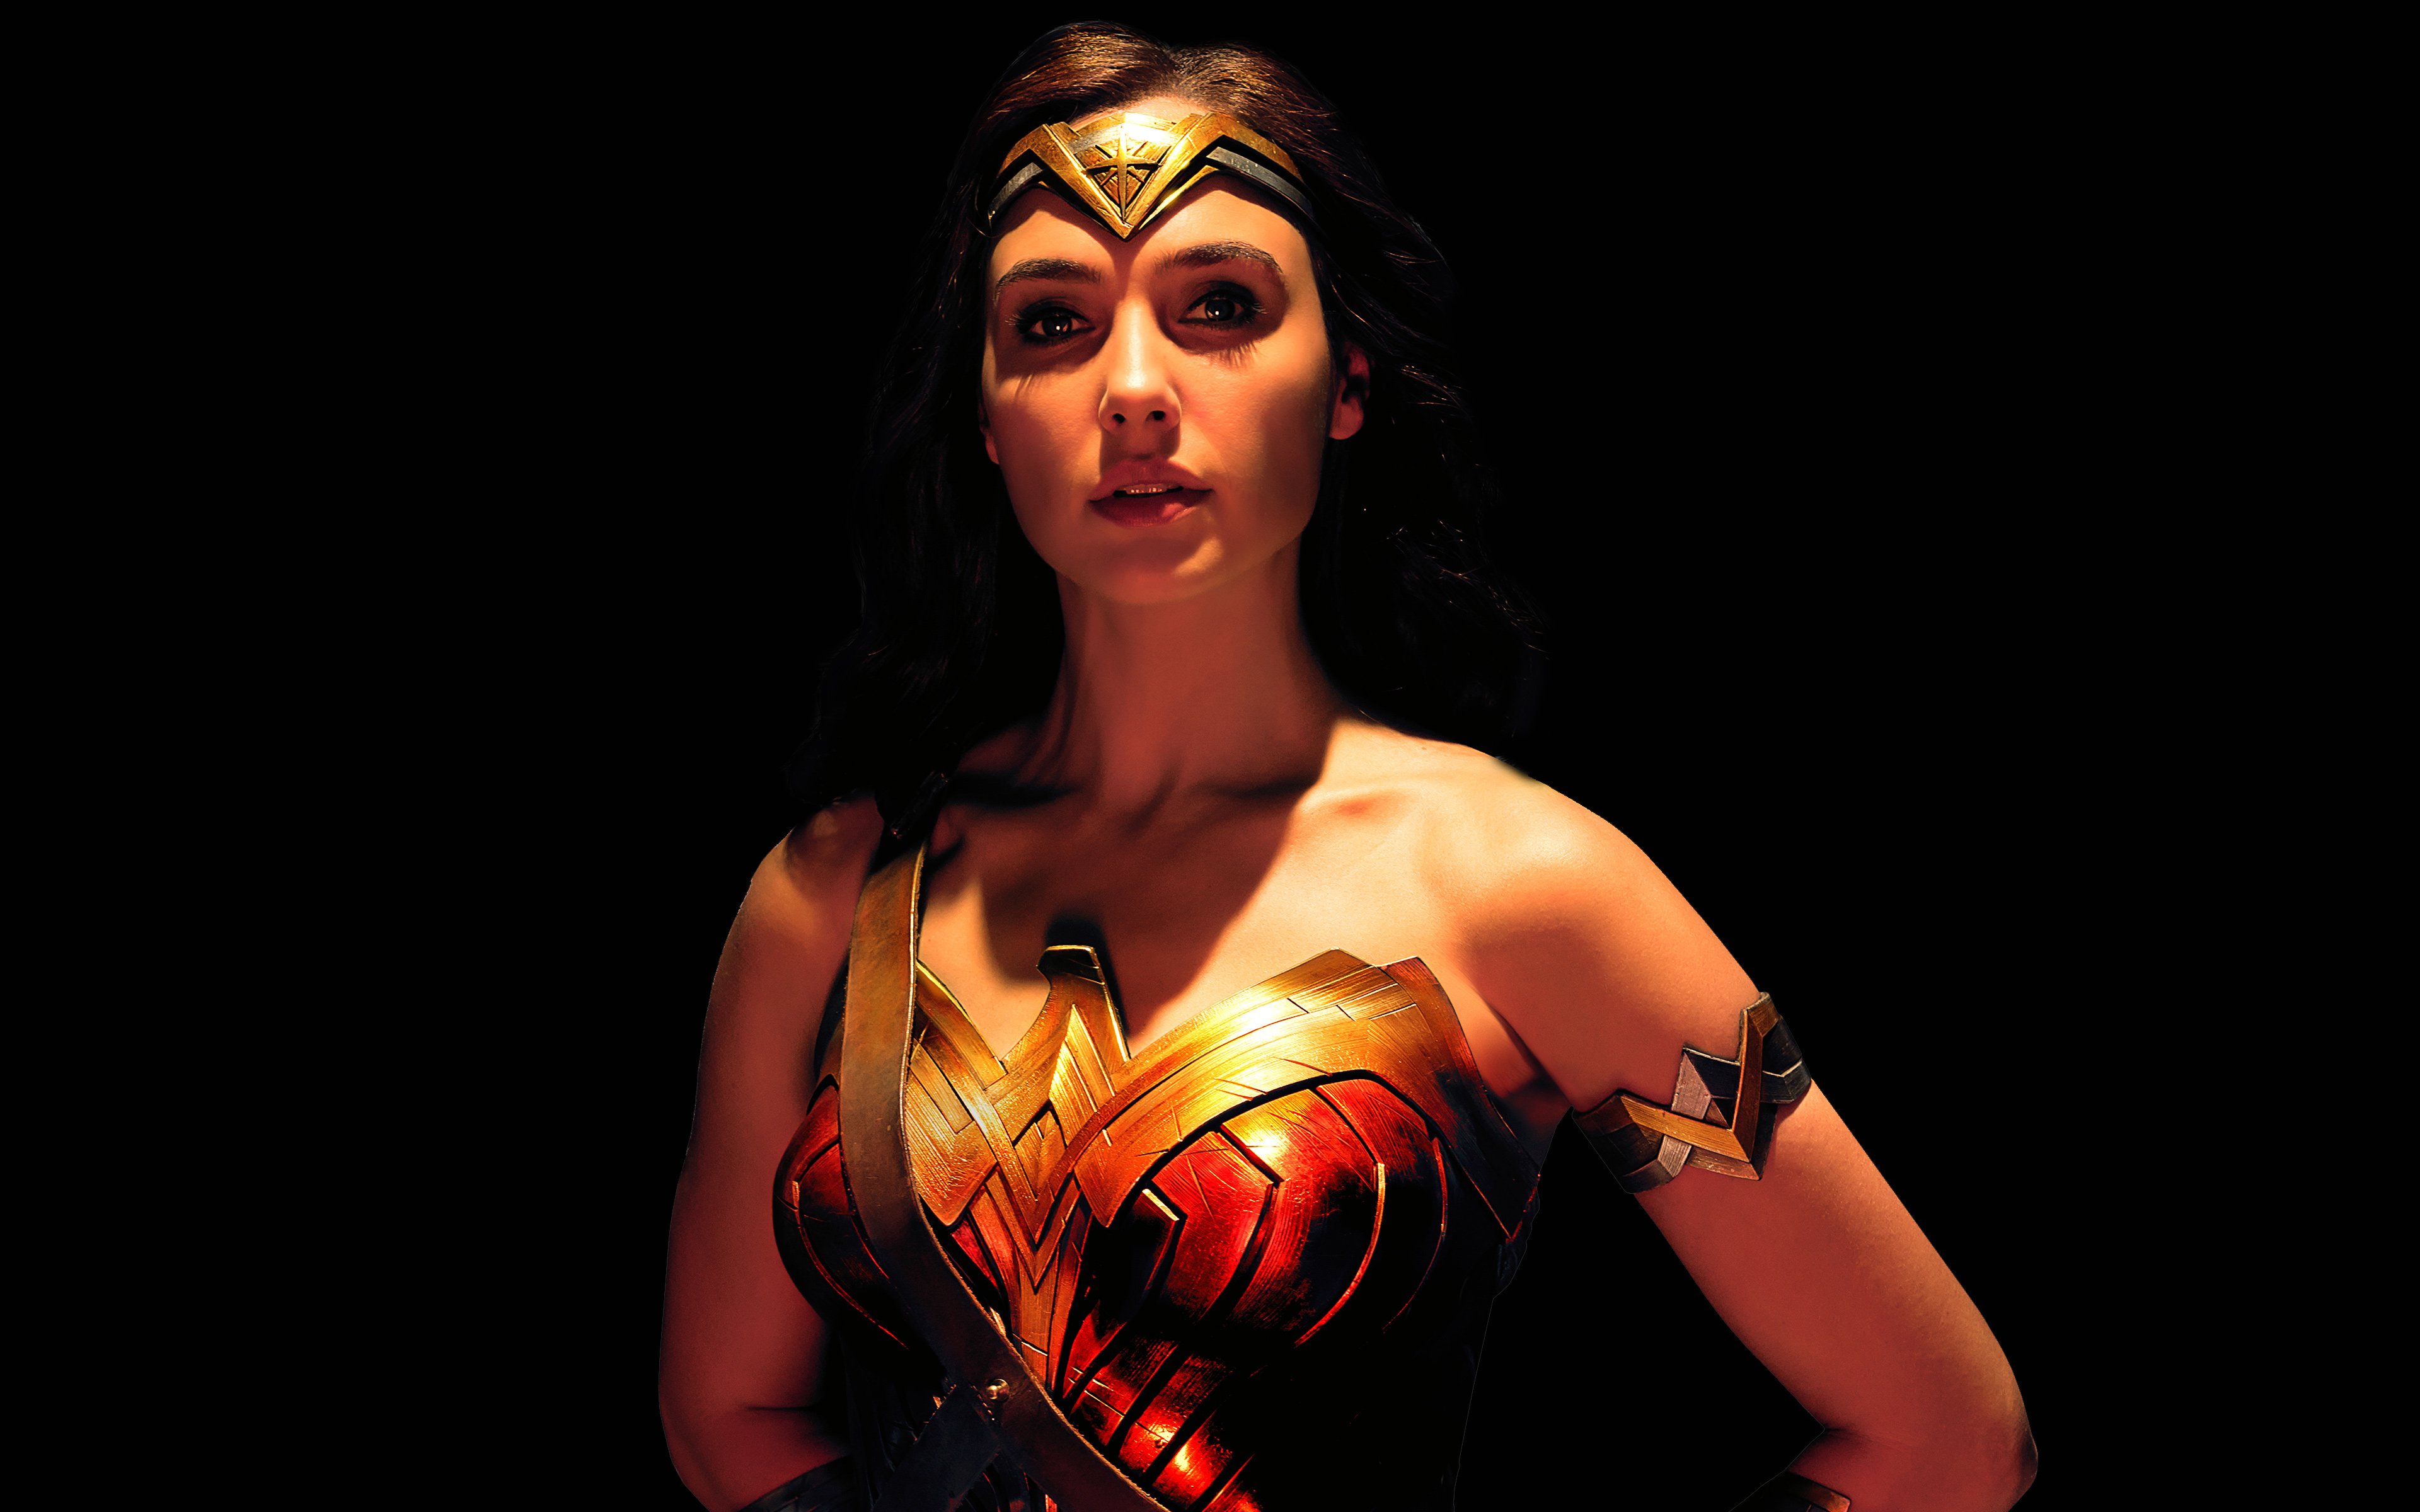 People 3840x2400 Wonder Woman Gal Gadot women actress superheroines DC Extended Universe movies face fantasy girl portrait brunette black background simple background model Israeli